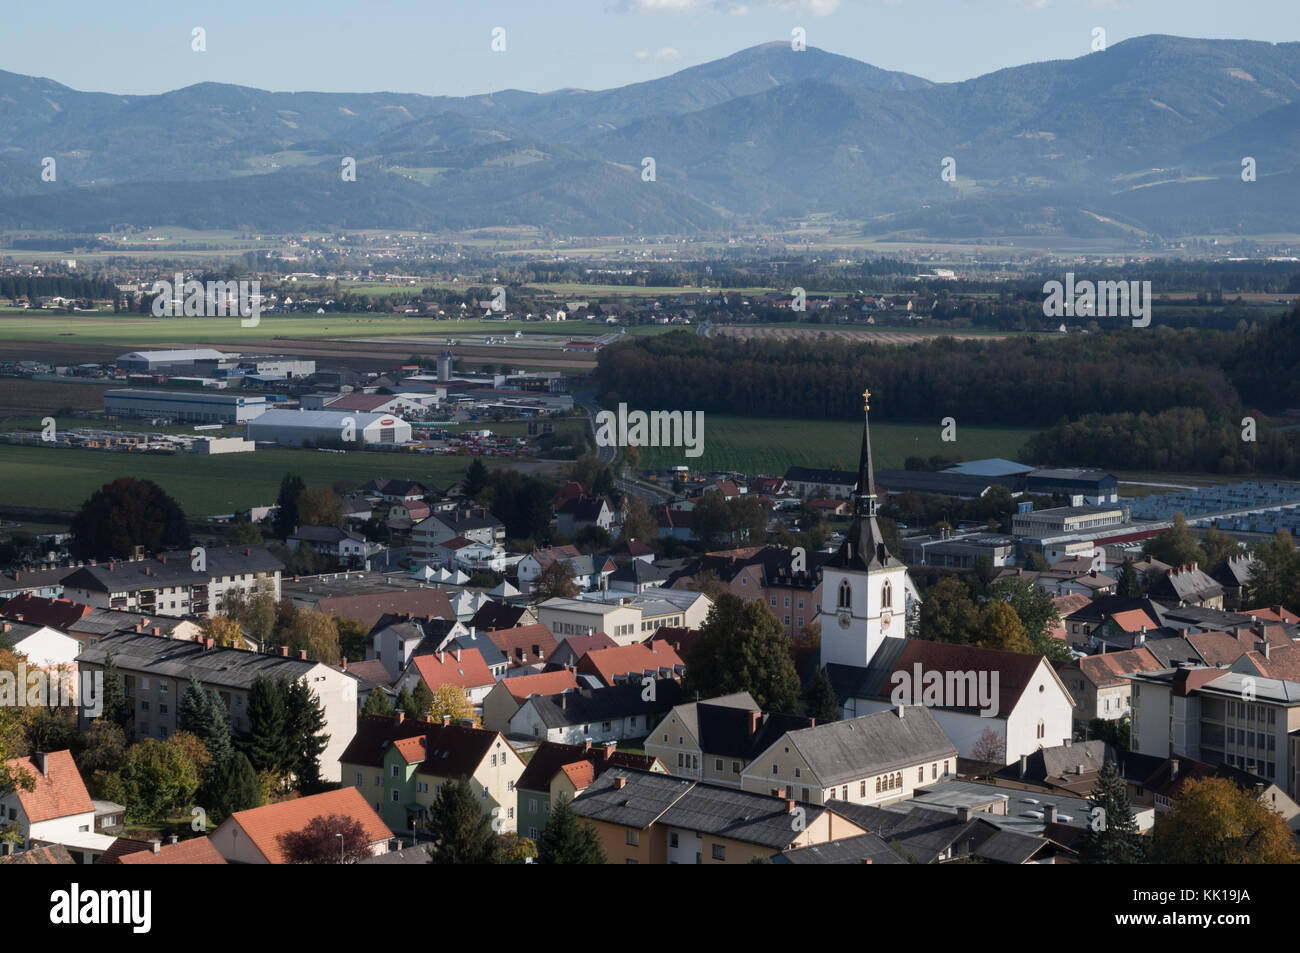 Fohnsdorf, Austria - 12.10.2017: The village of Fohnsdorf in the Mur river valley Stock Photo